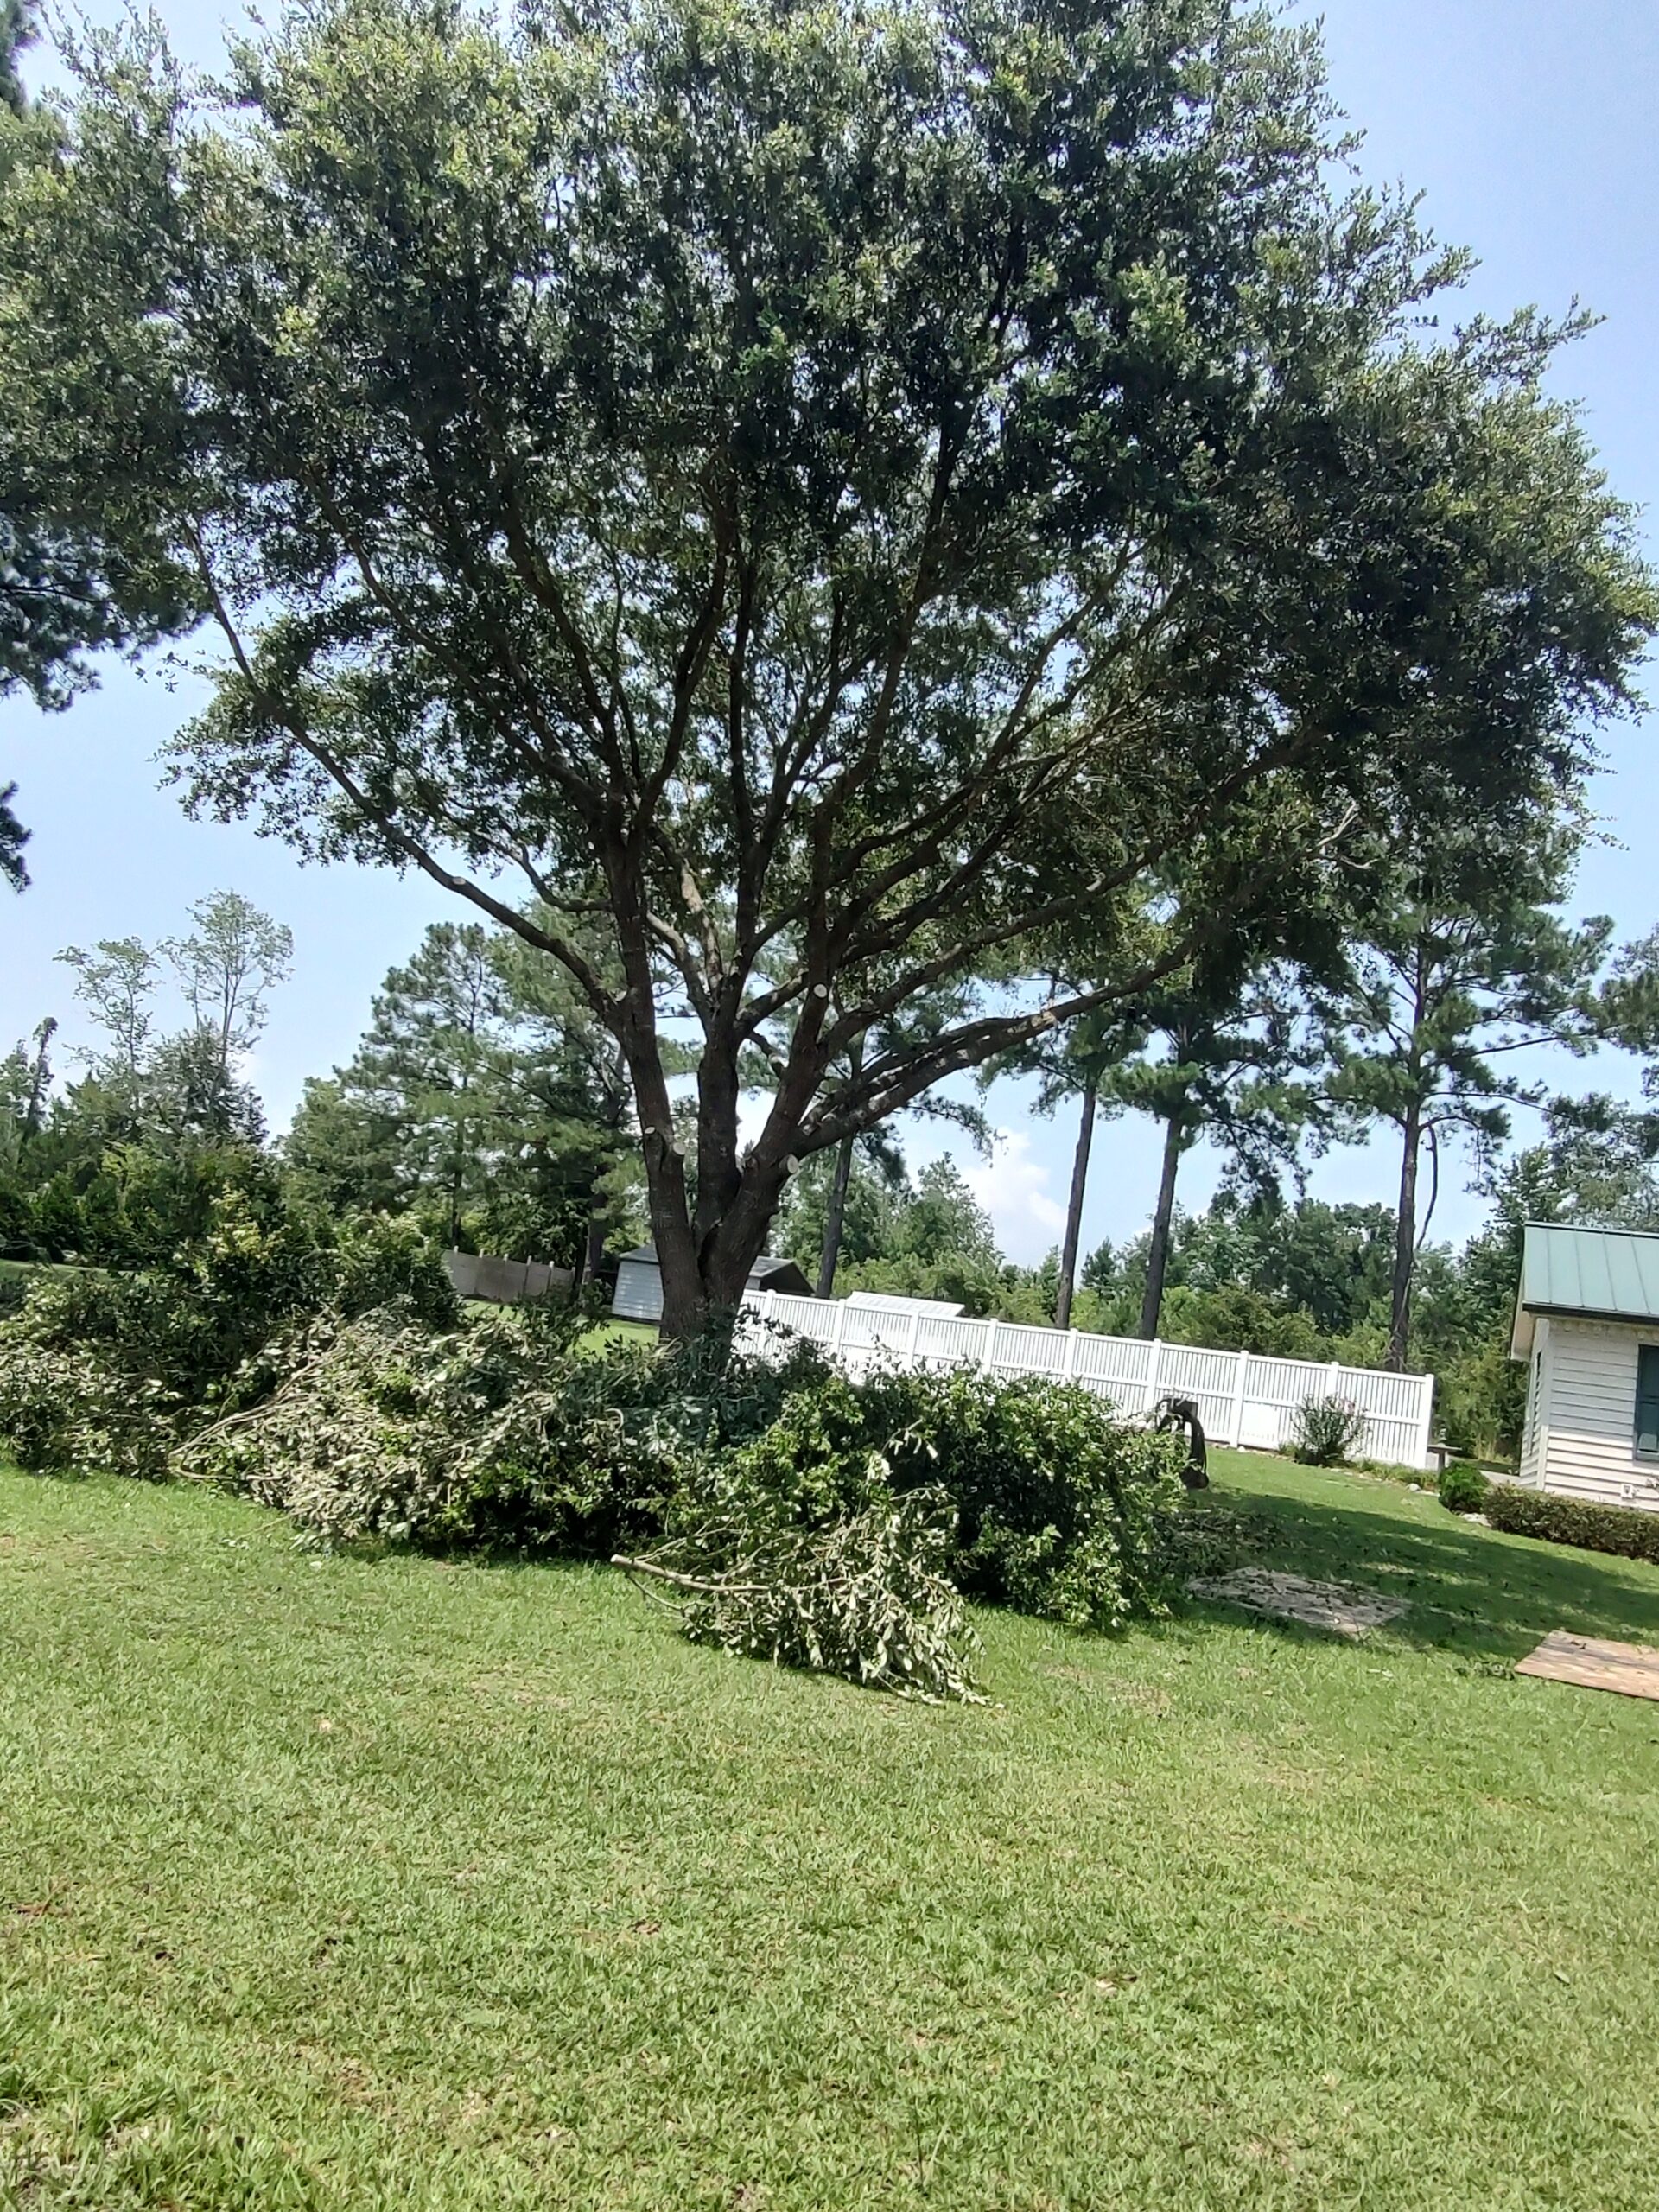 Tallahassee Florida Tree Trimming